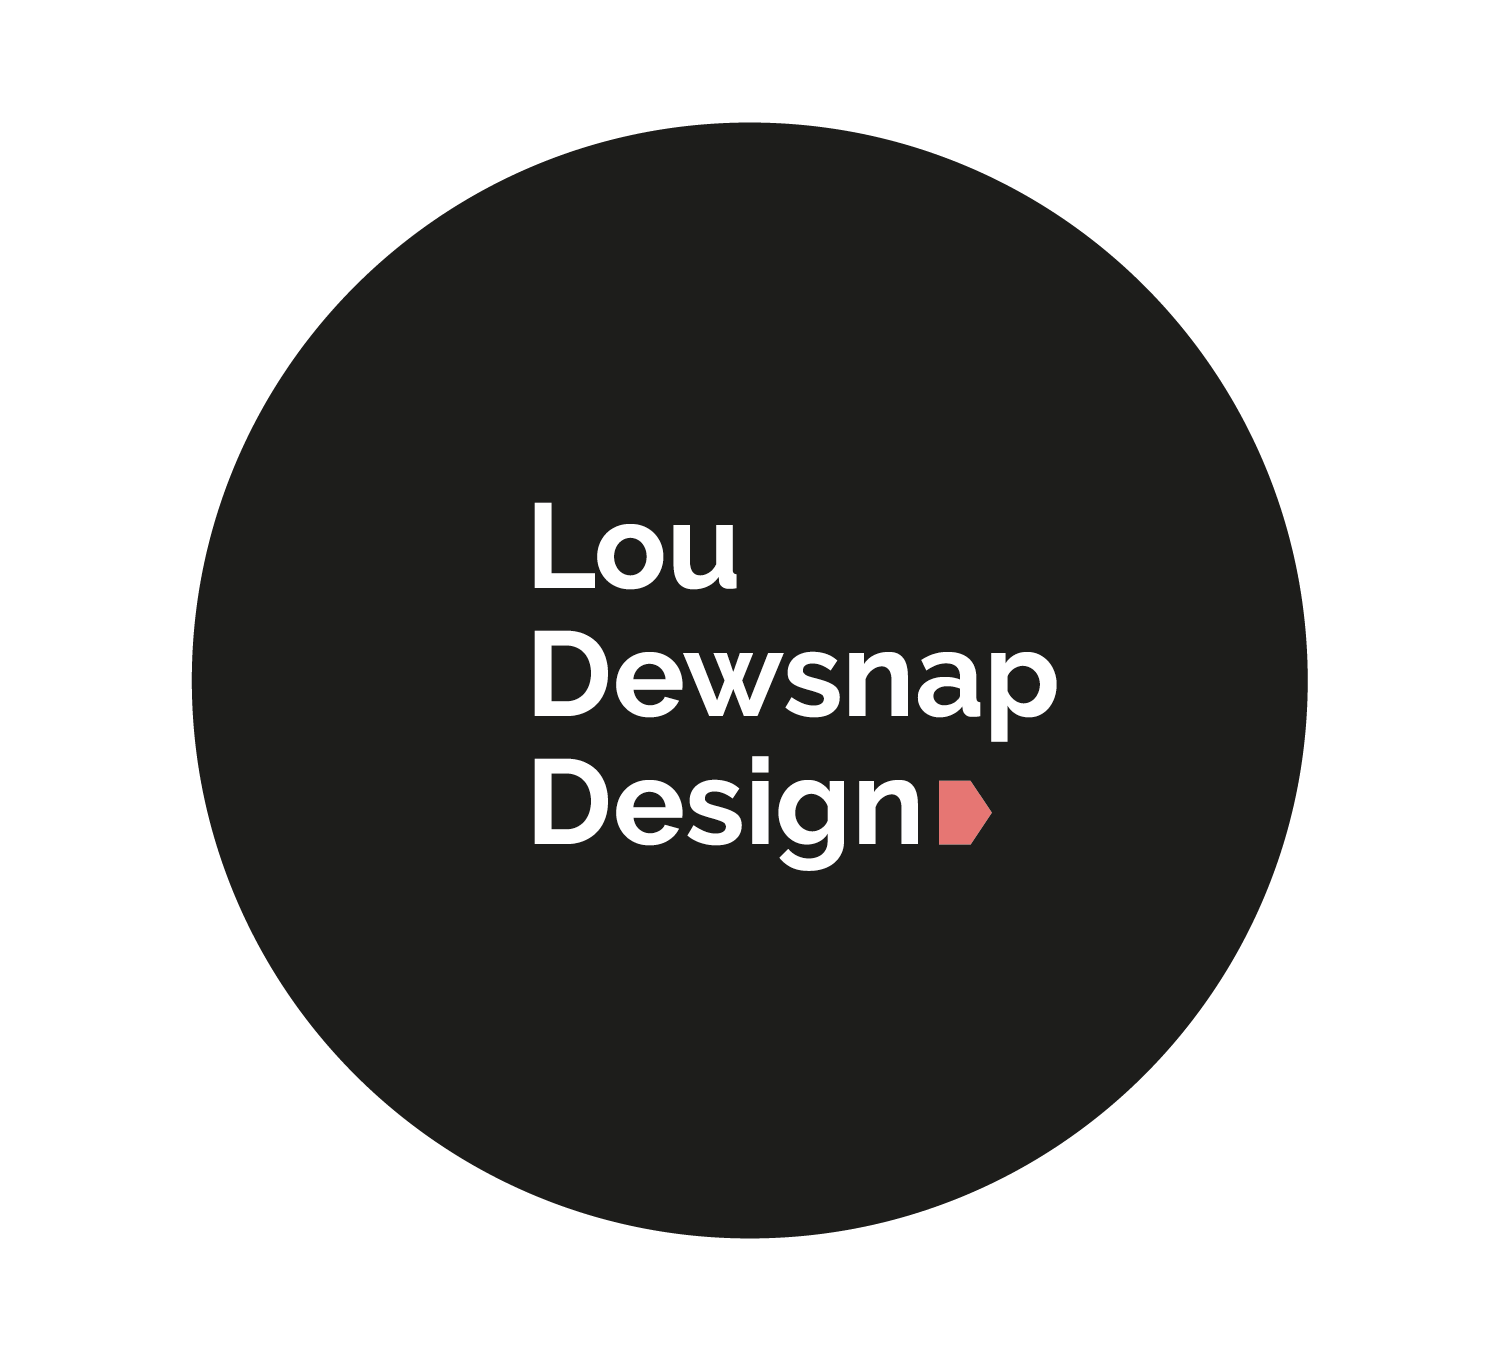 Lou Dewsnap Design